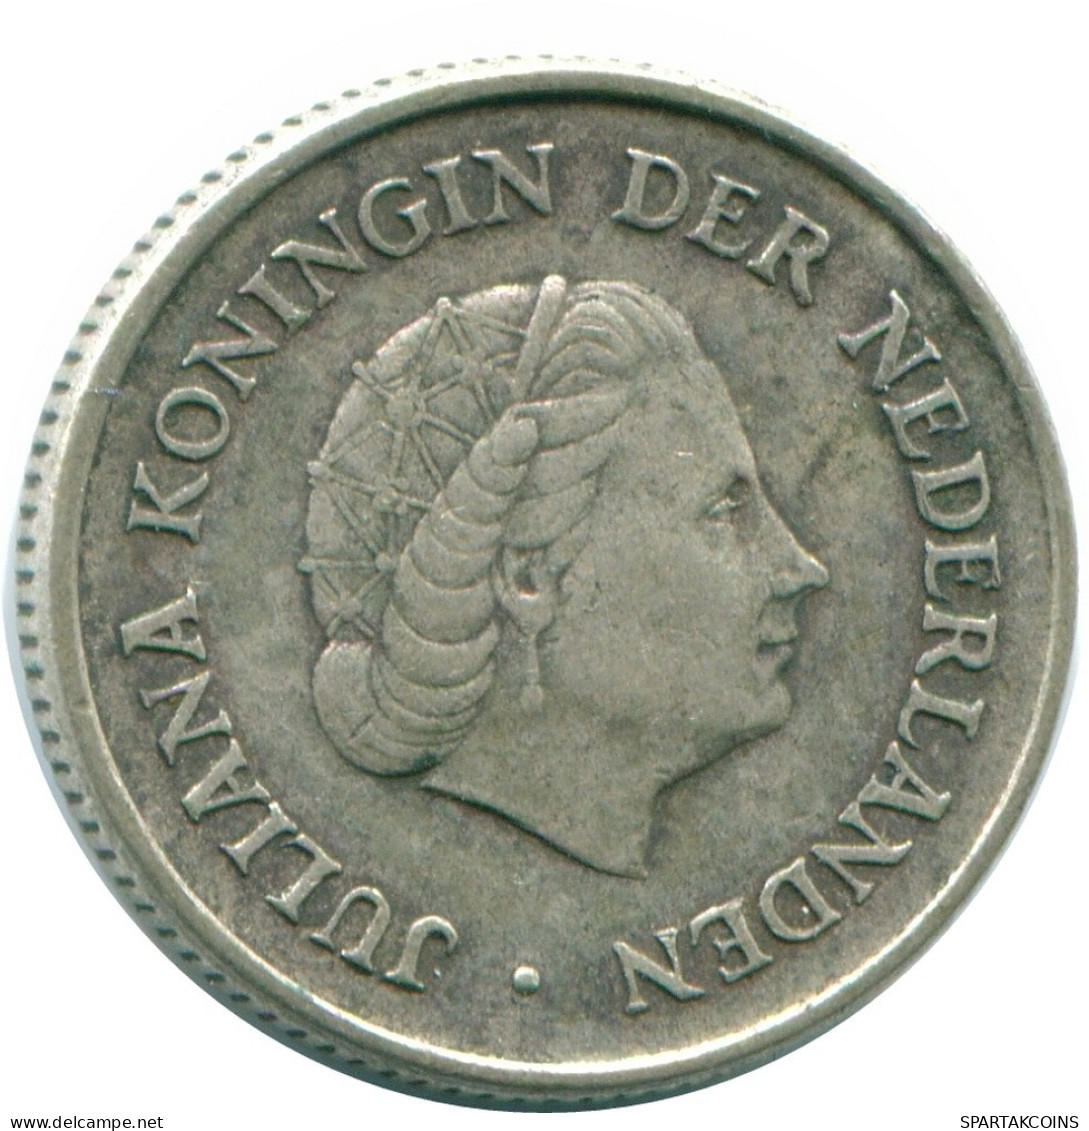 1/4 GULDEN 1970 NETHERLANDS ANTILLES SILVER Colonial Coin #NL11700.4.U.A - Netherlands Antilles